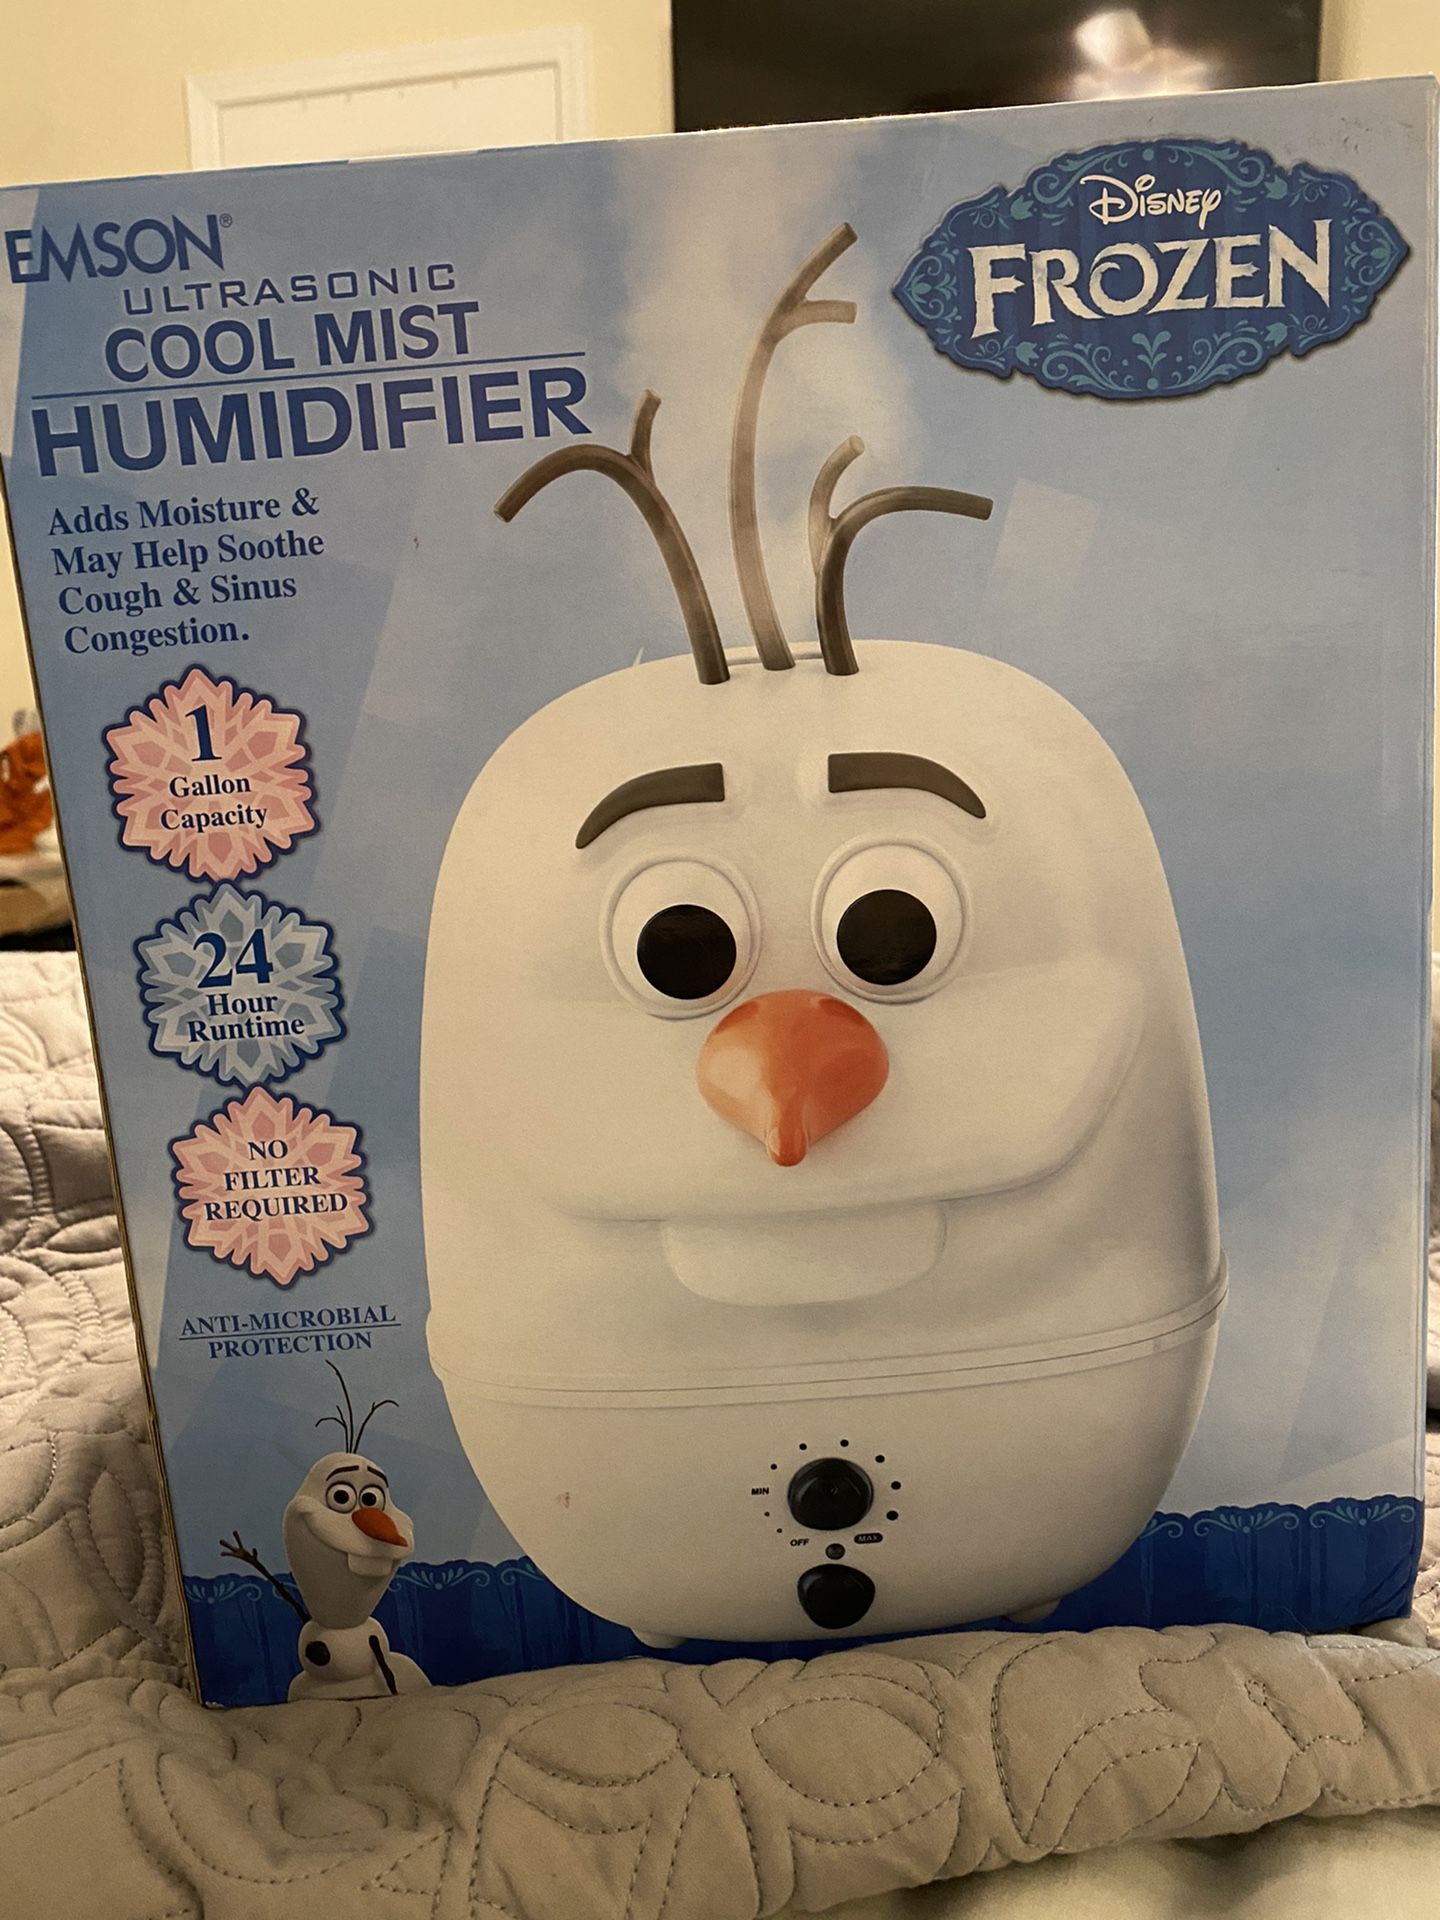 Frozen’s Olaf Cool mist humidifier